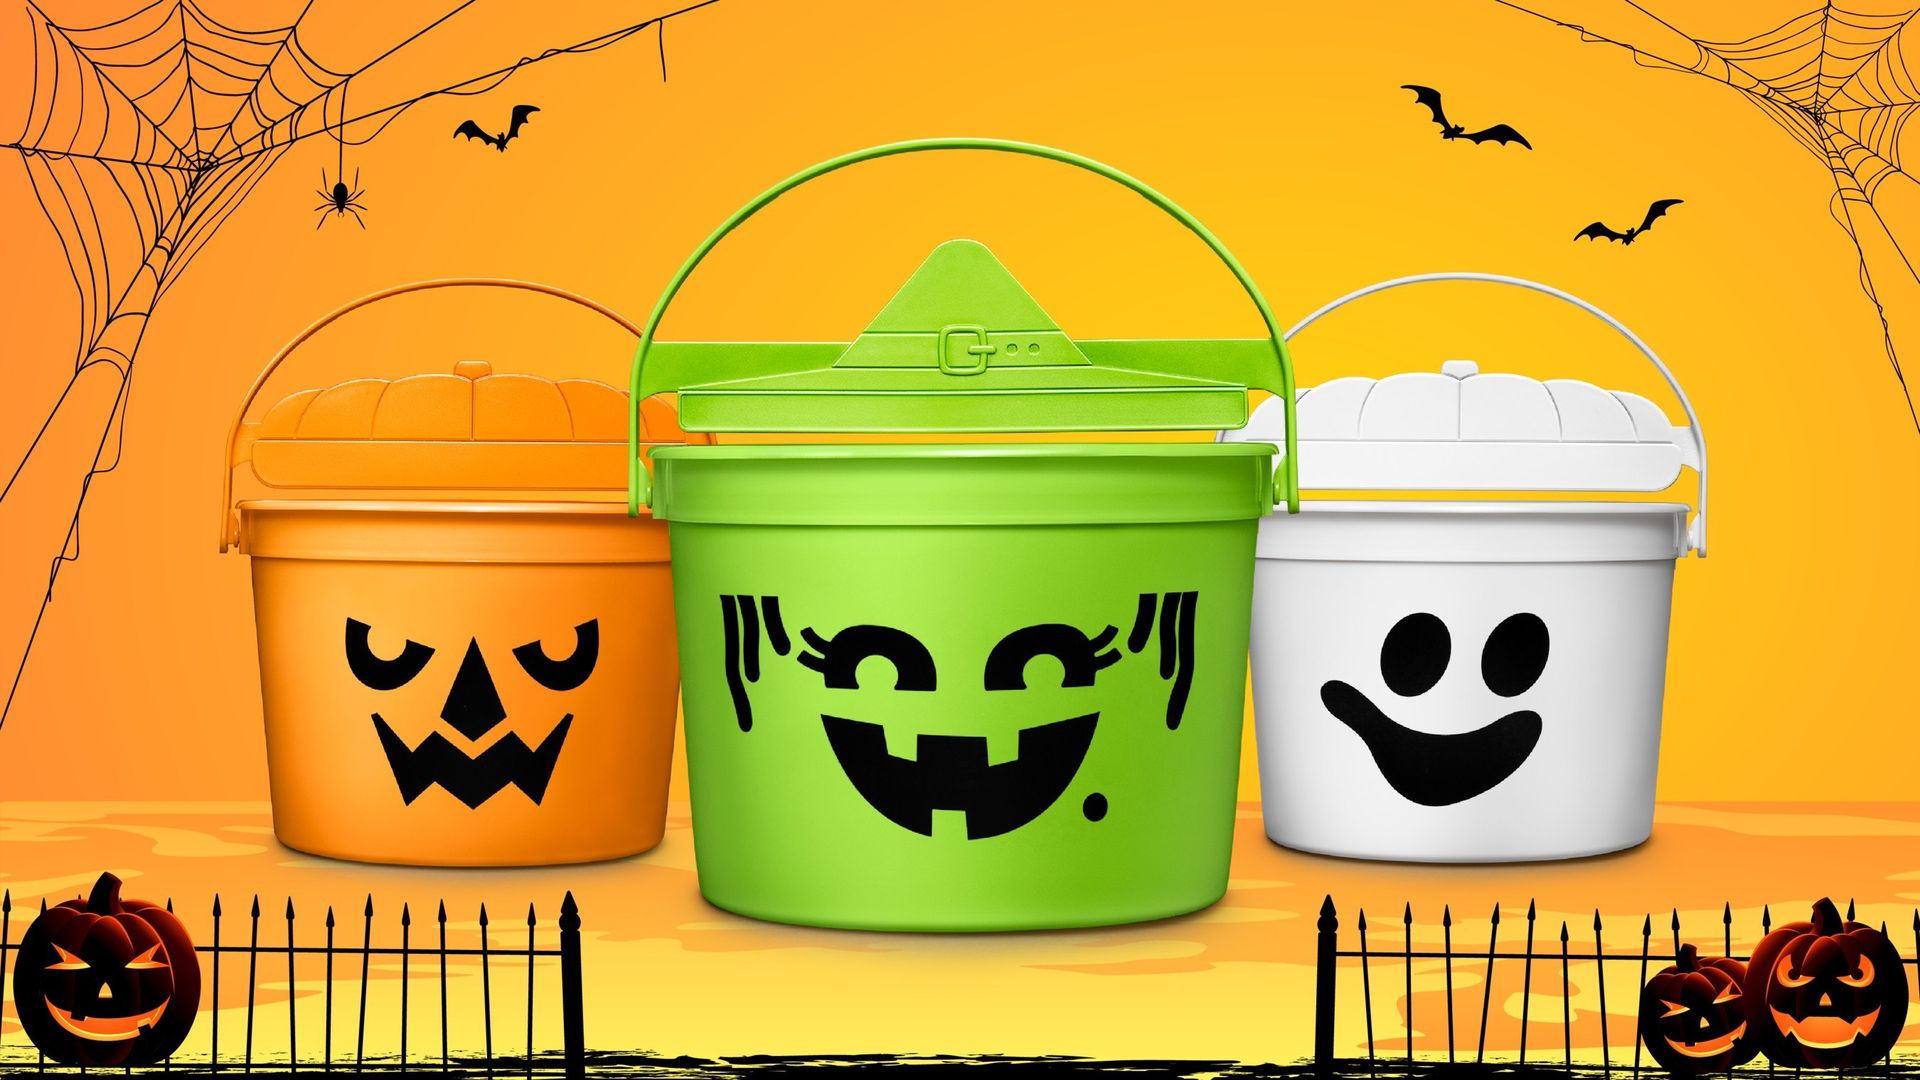 Cartoon faces on plastic buckets